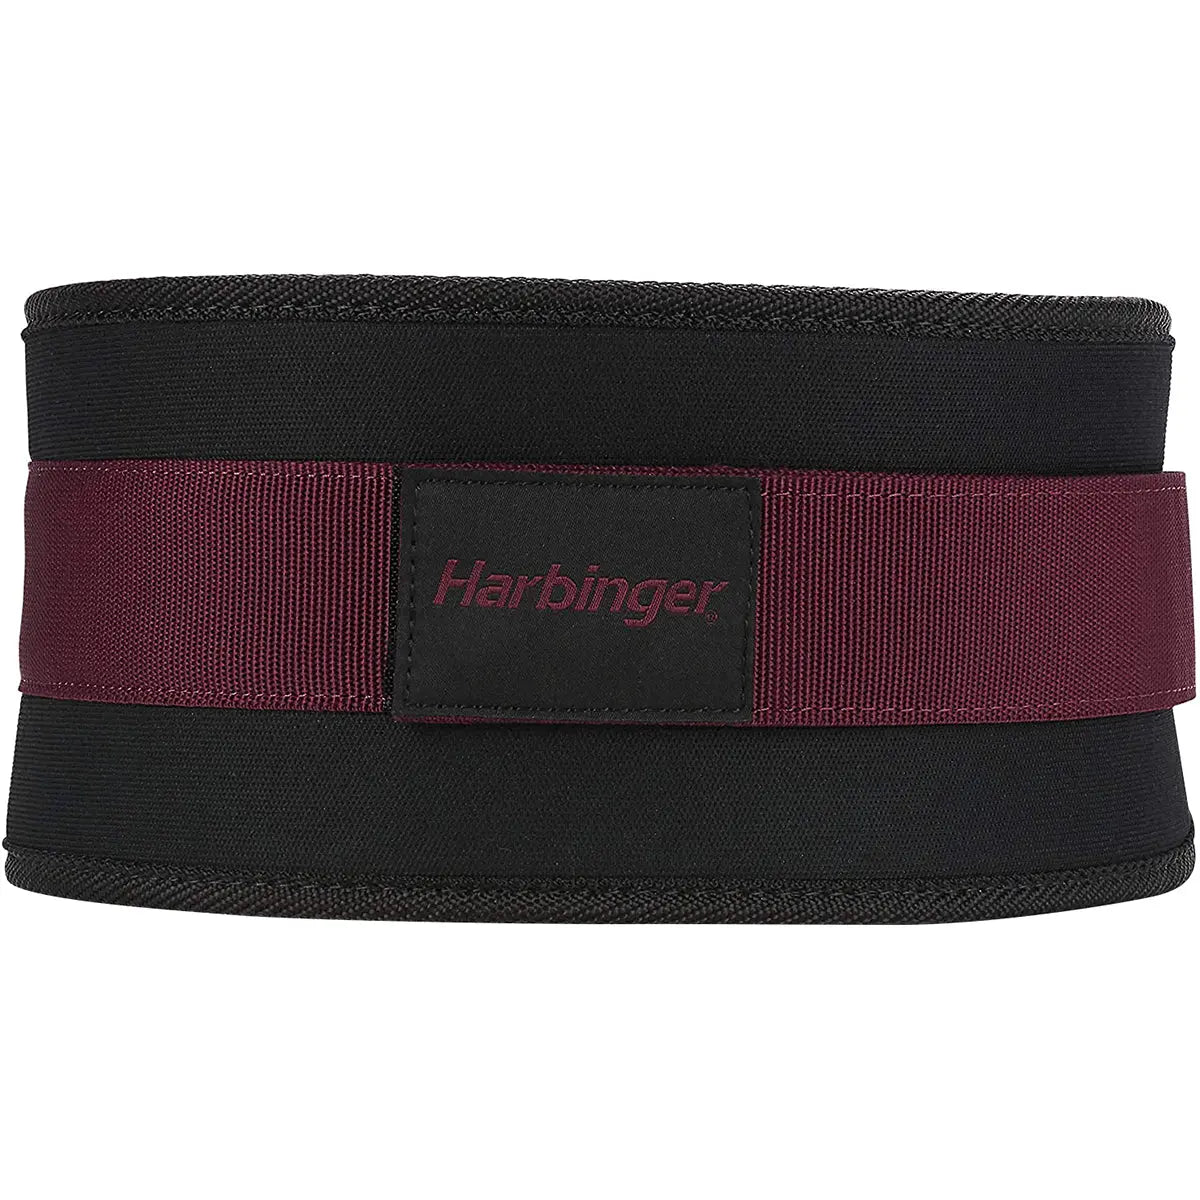 Harbinger 4.5" Unisex Foam Core Weight Lifting Belt - Black/Merlot Harbinger